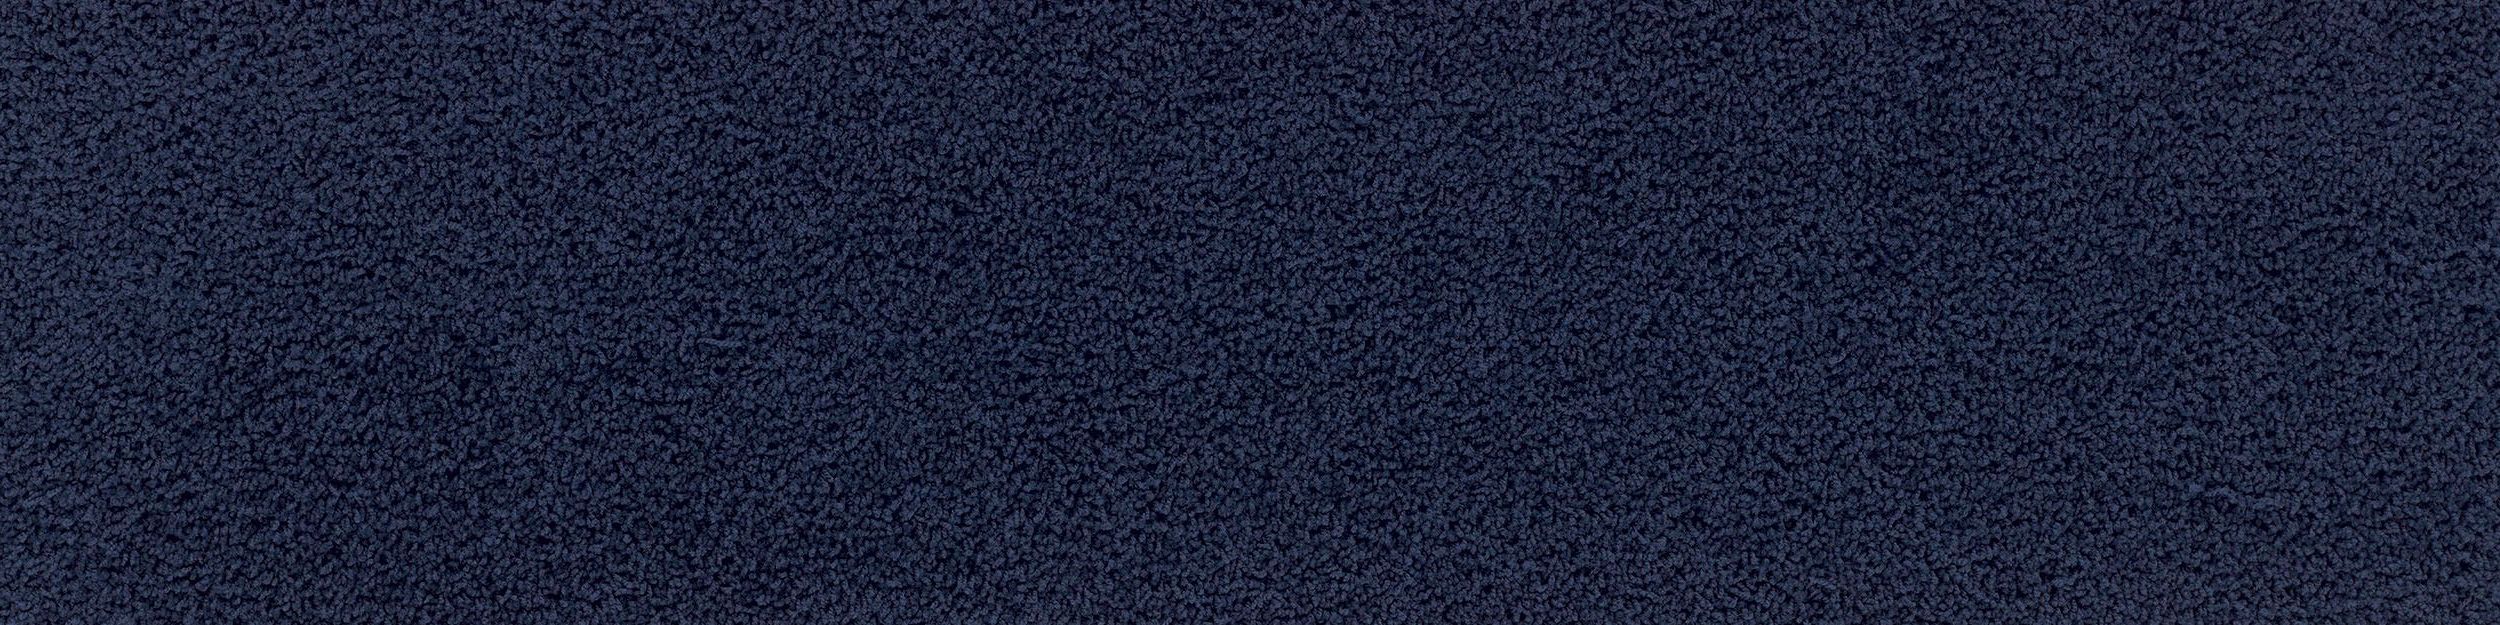 HN830 Carpet Tile In Cobalt número de imagen 2